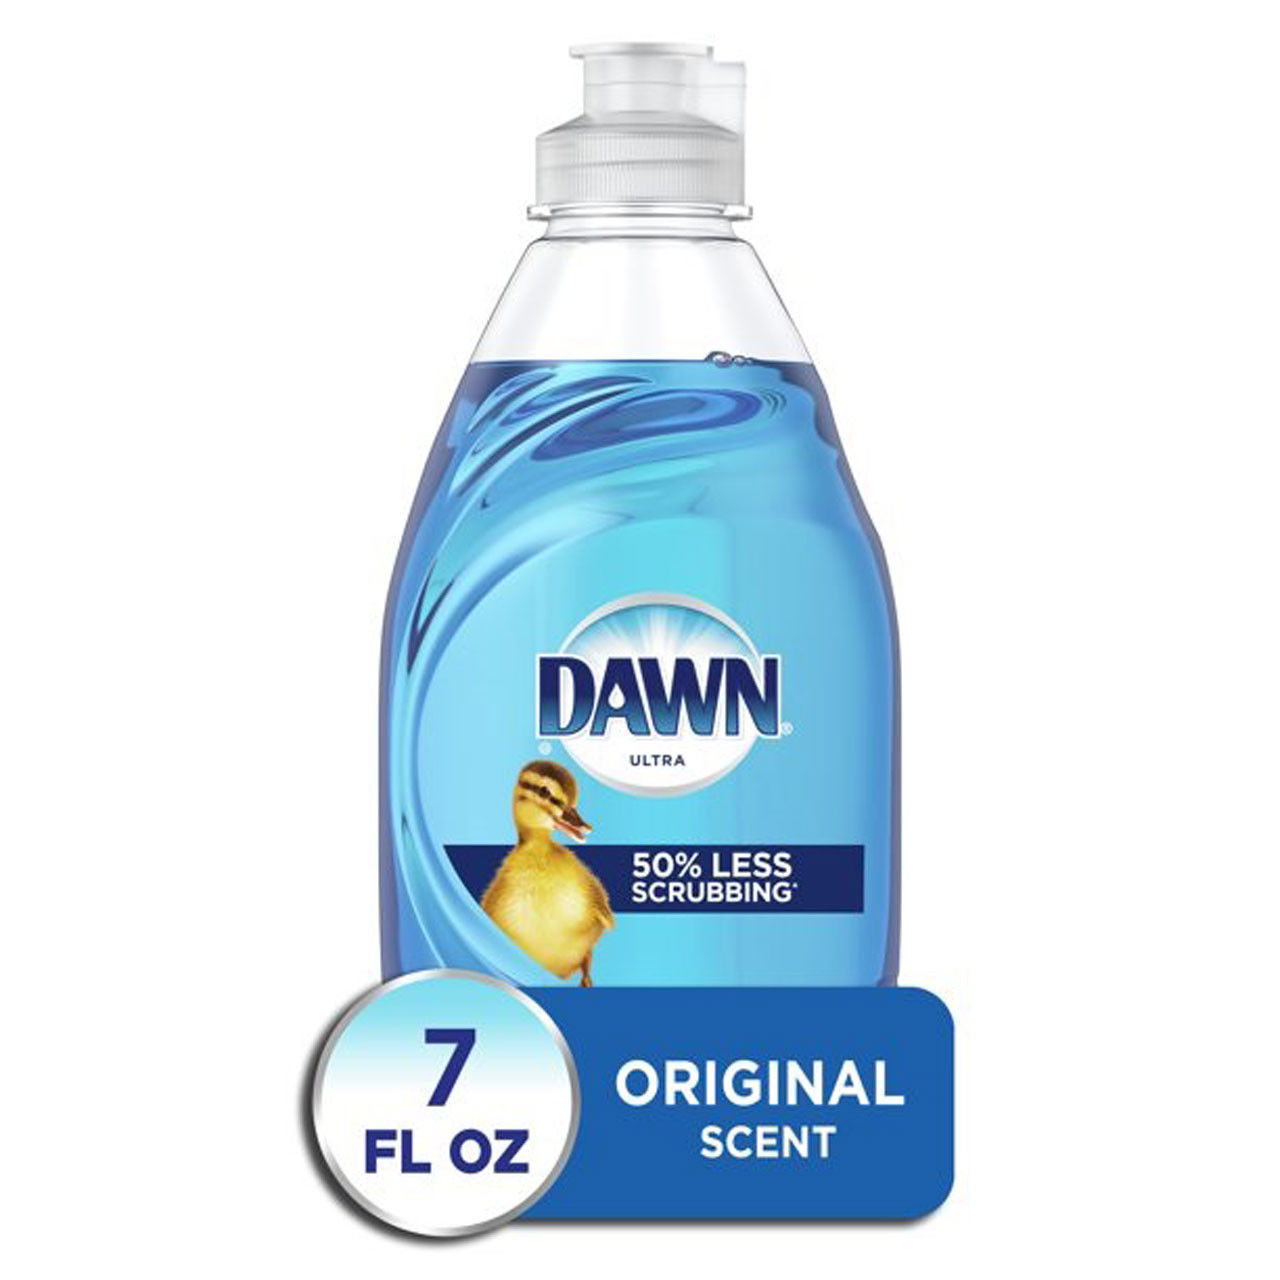 Dawn Liquid Dishwashing Detergent - 12 Pack Questions & Answers